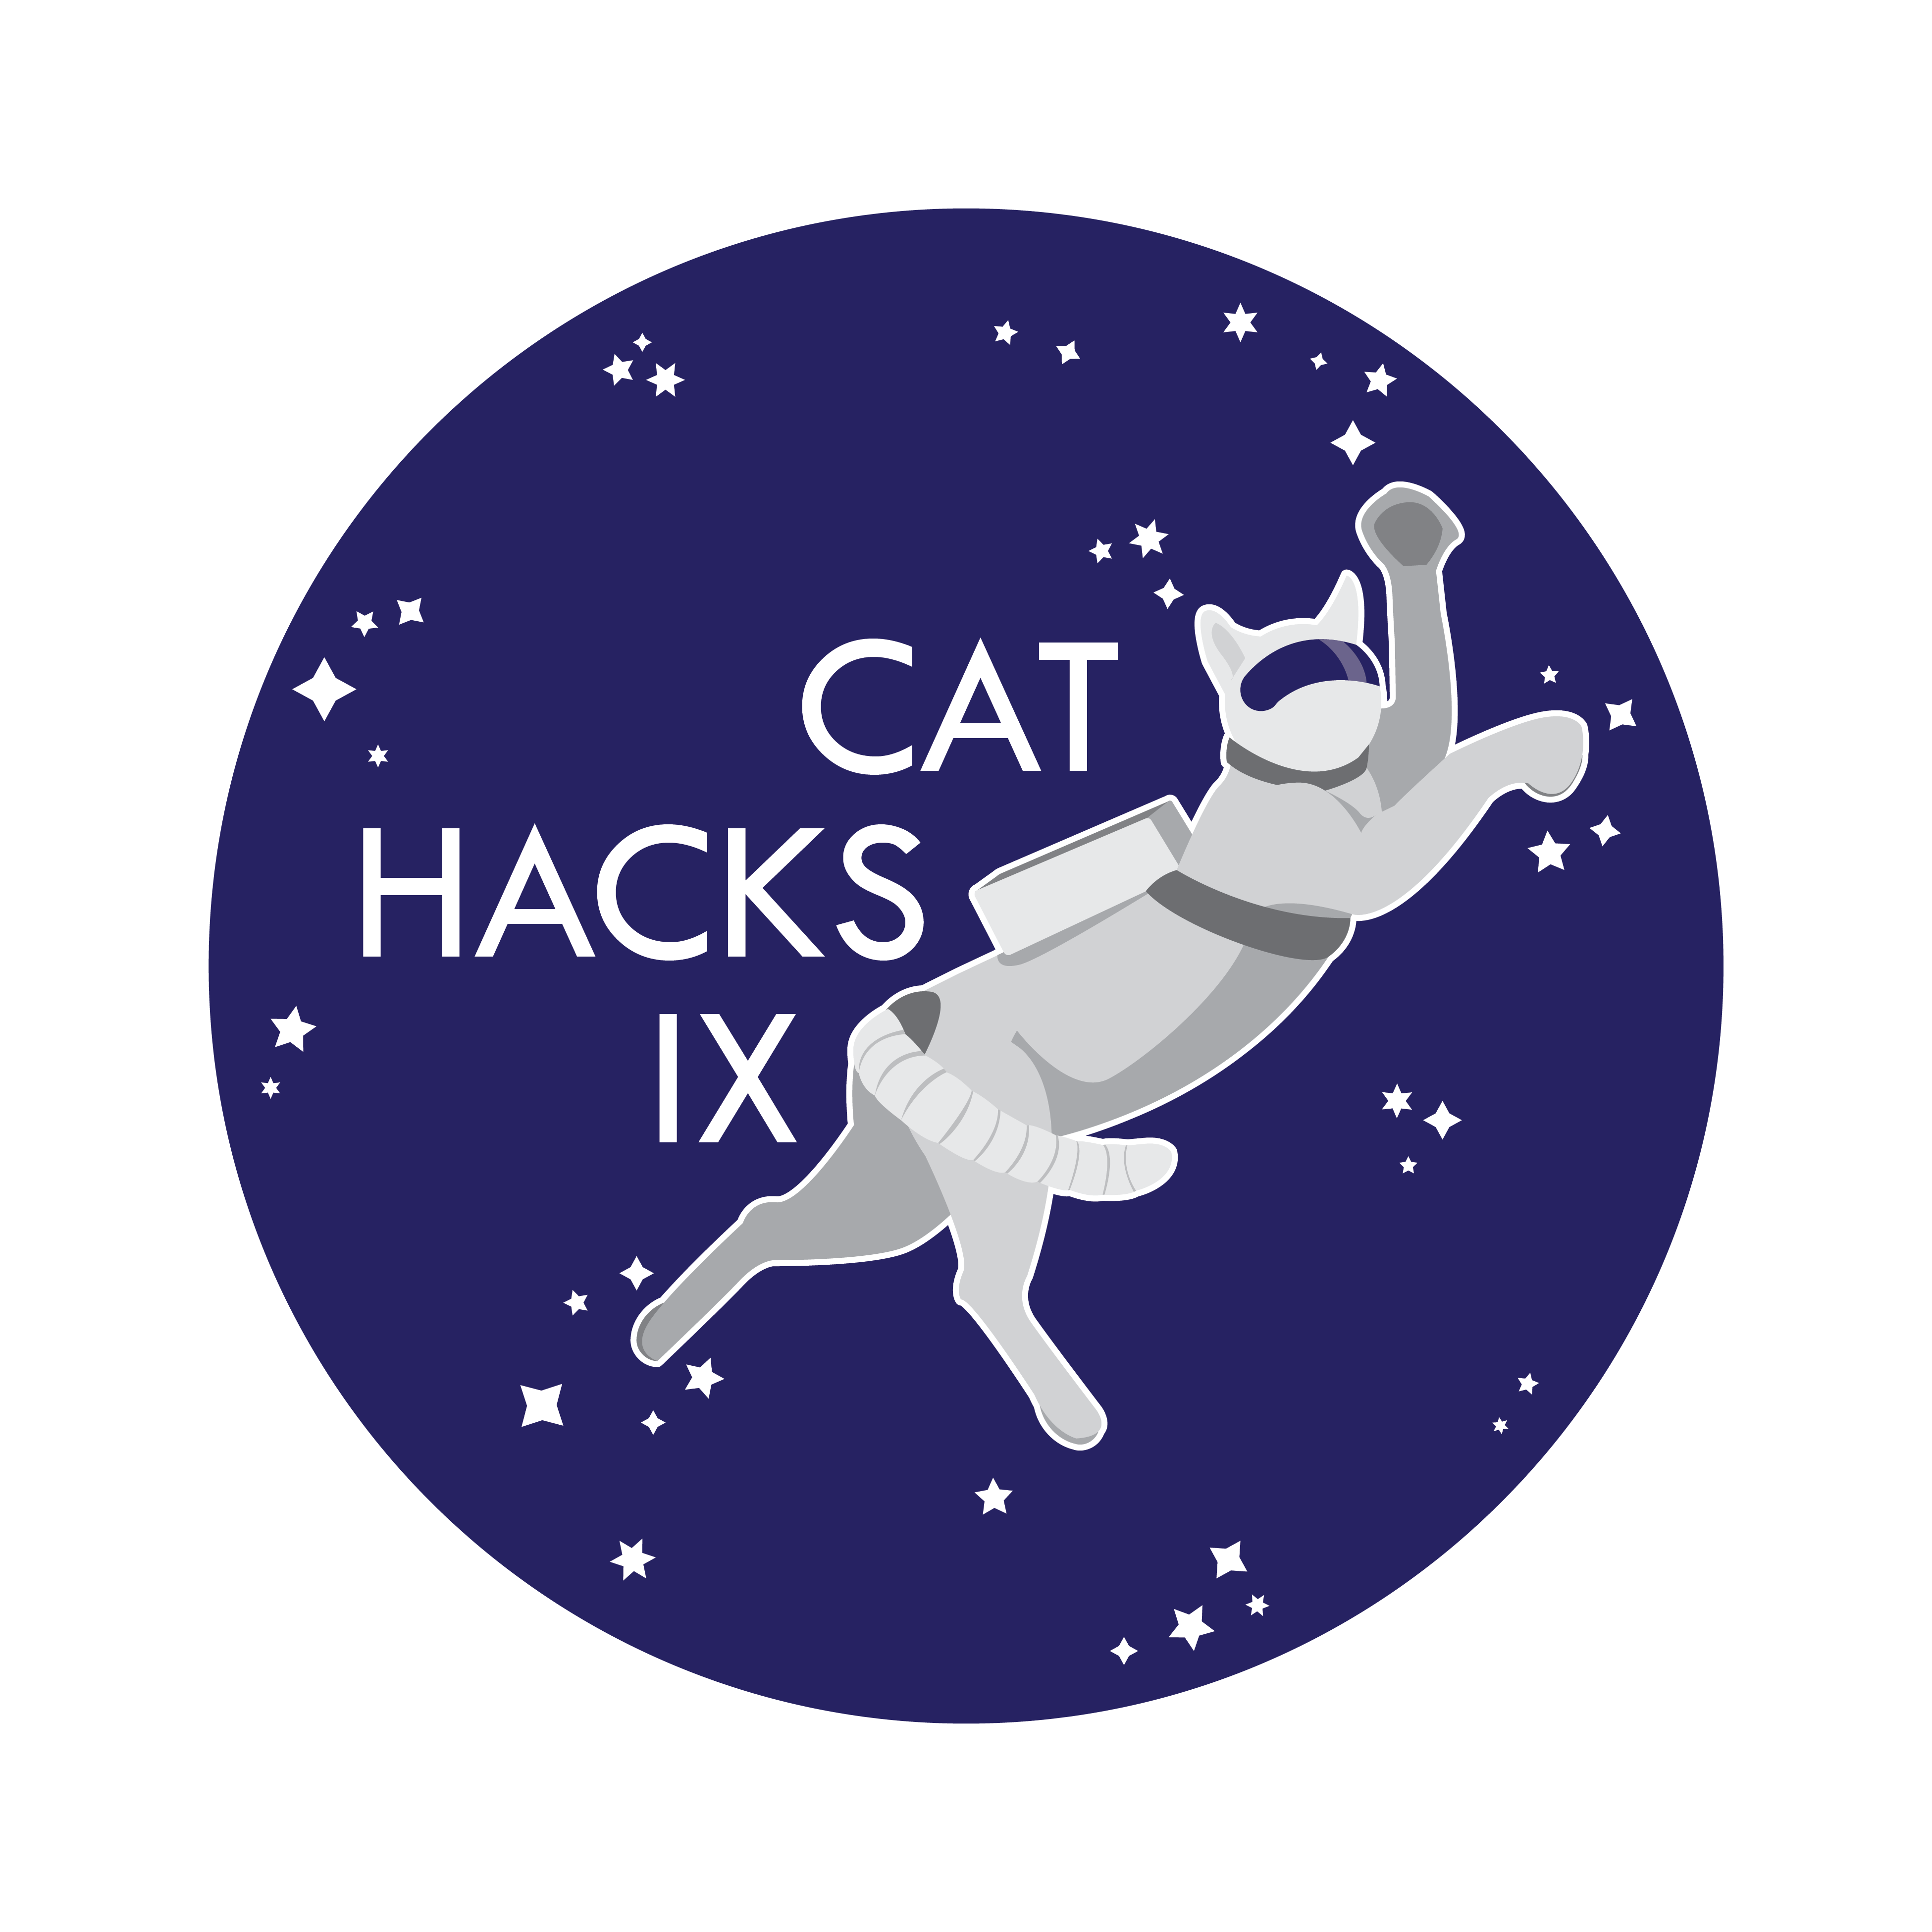 space cathacks logo